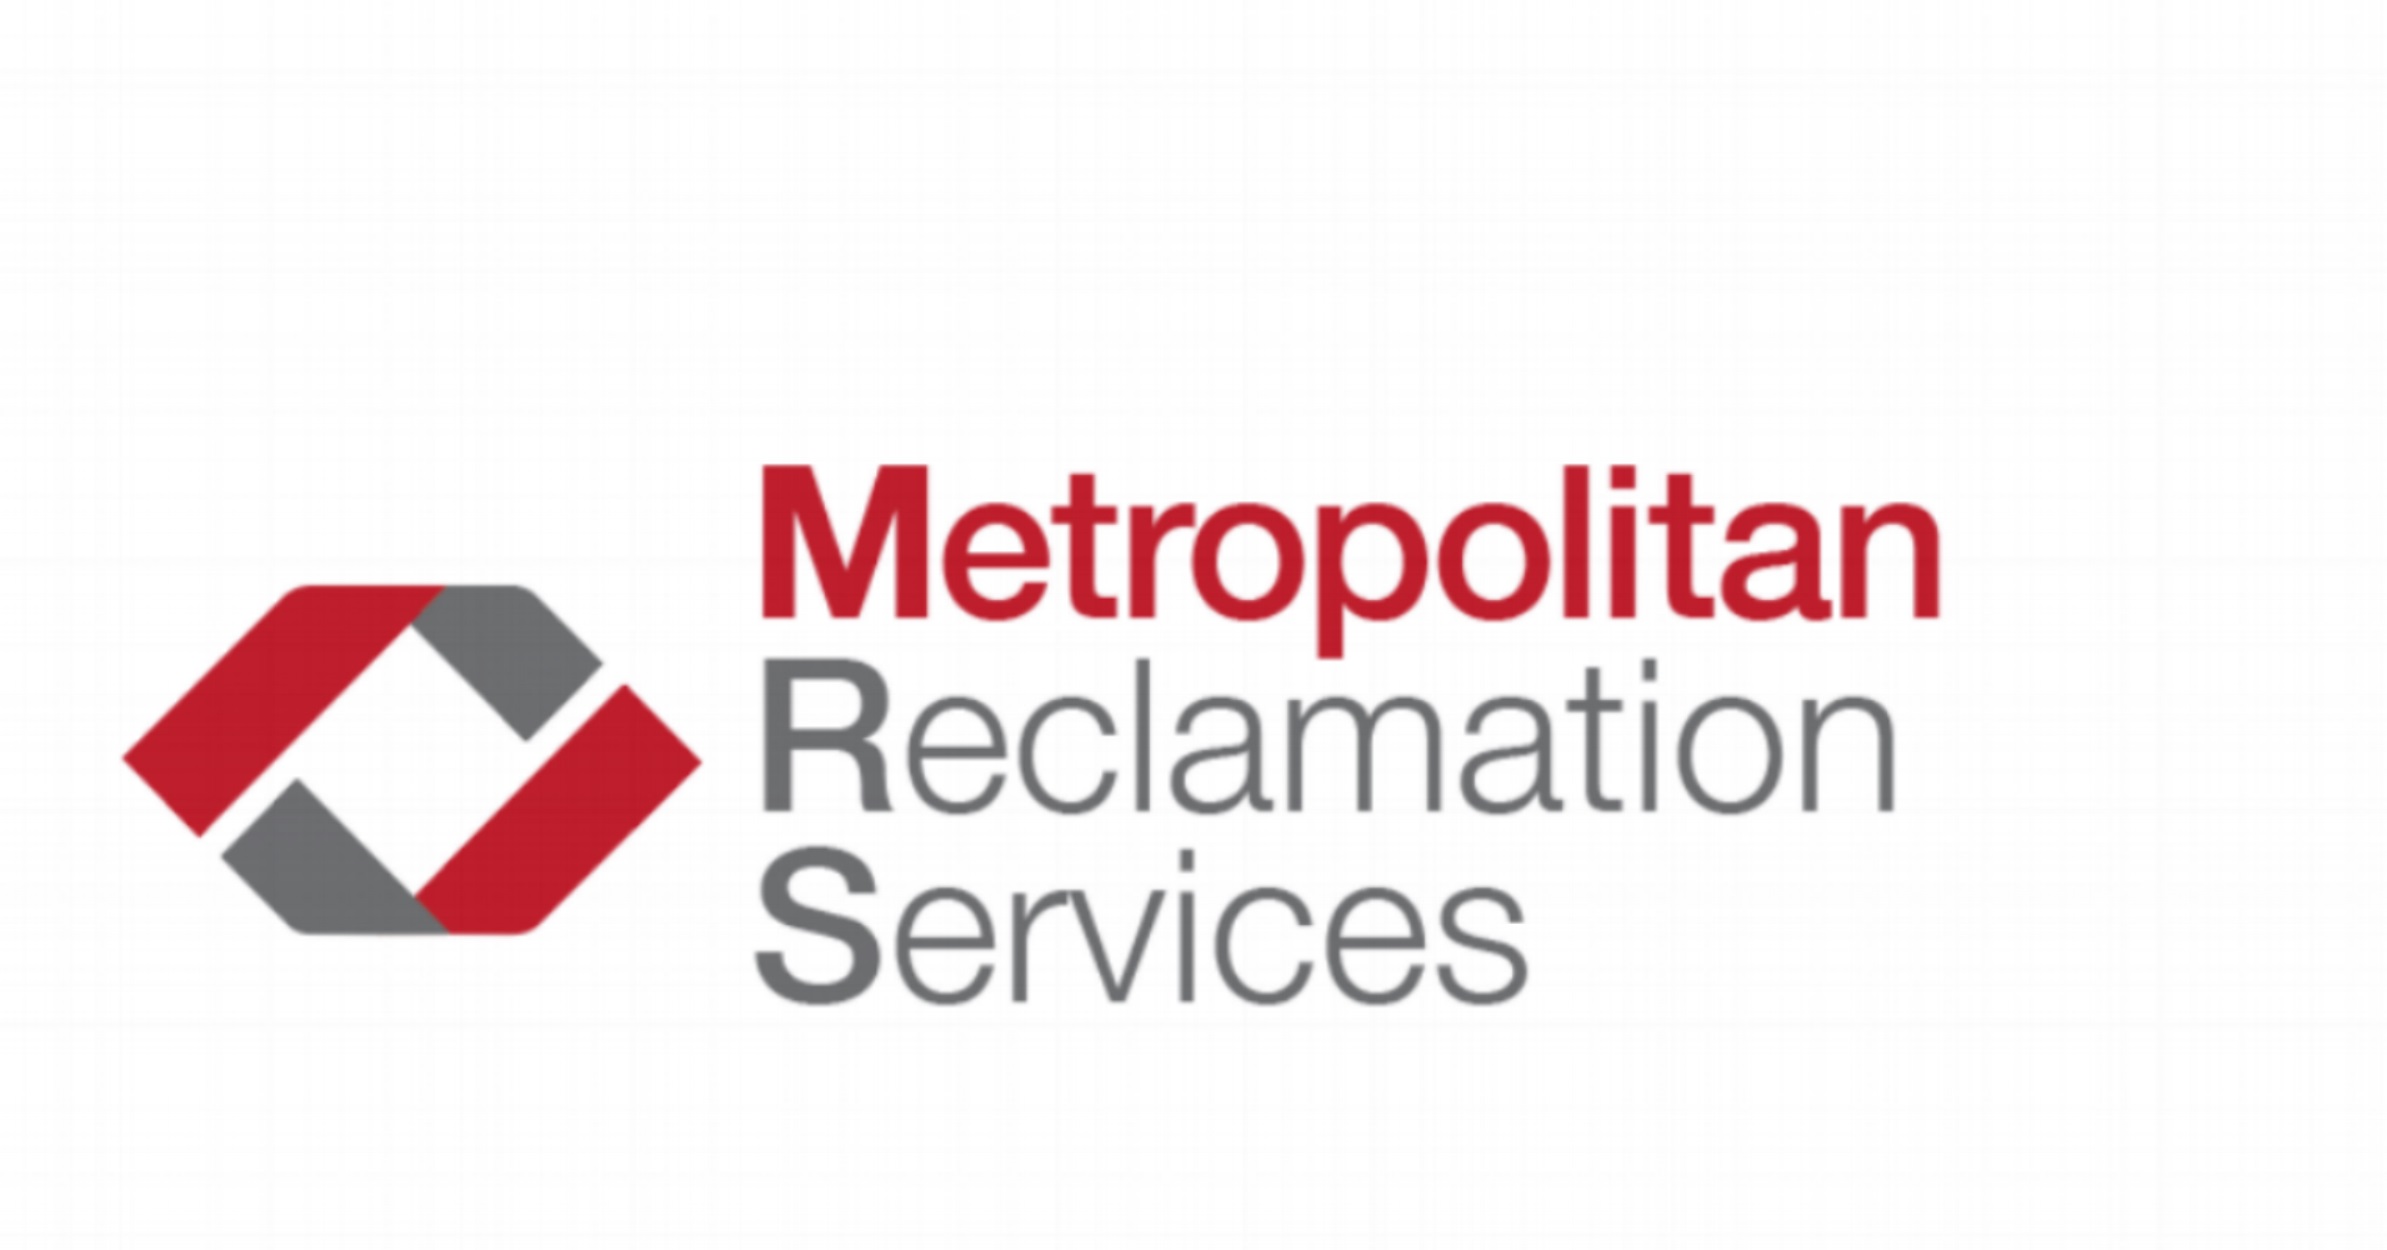 Metropolitan Reclamation Services